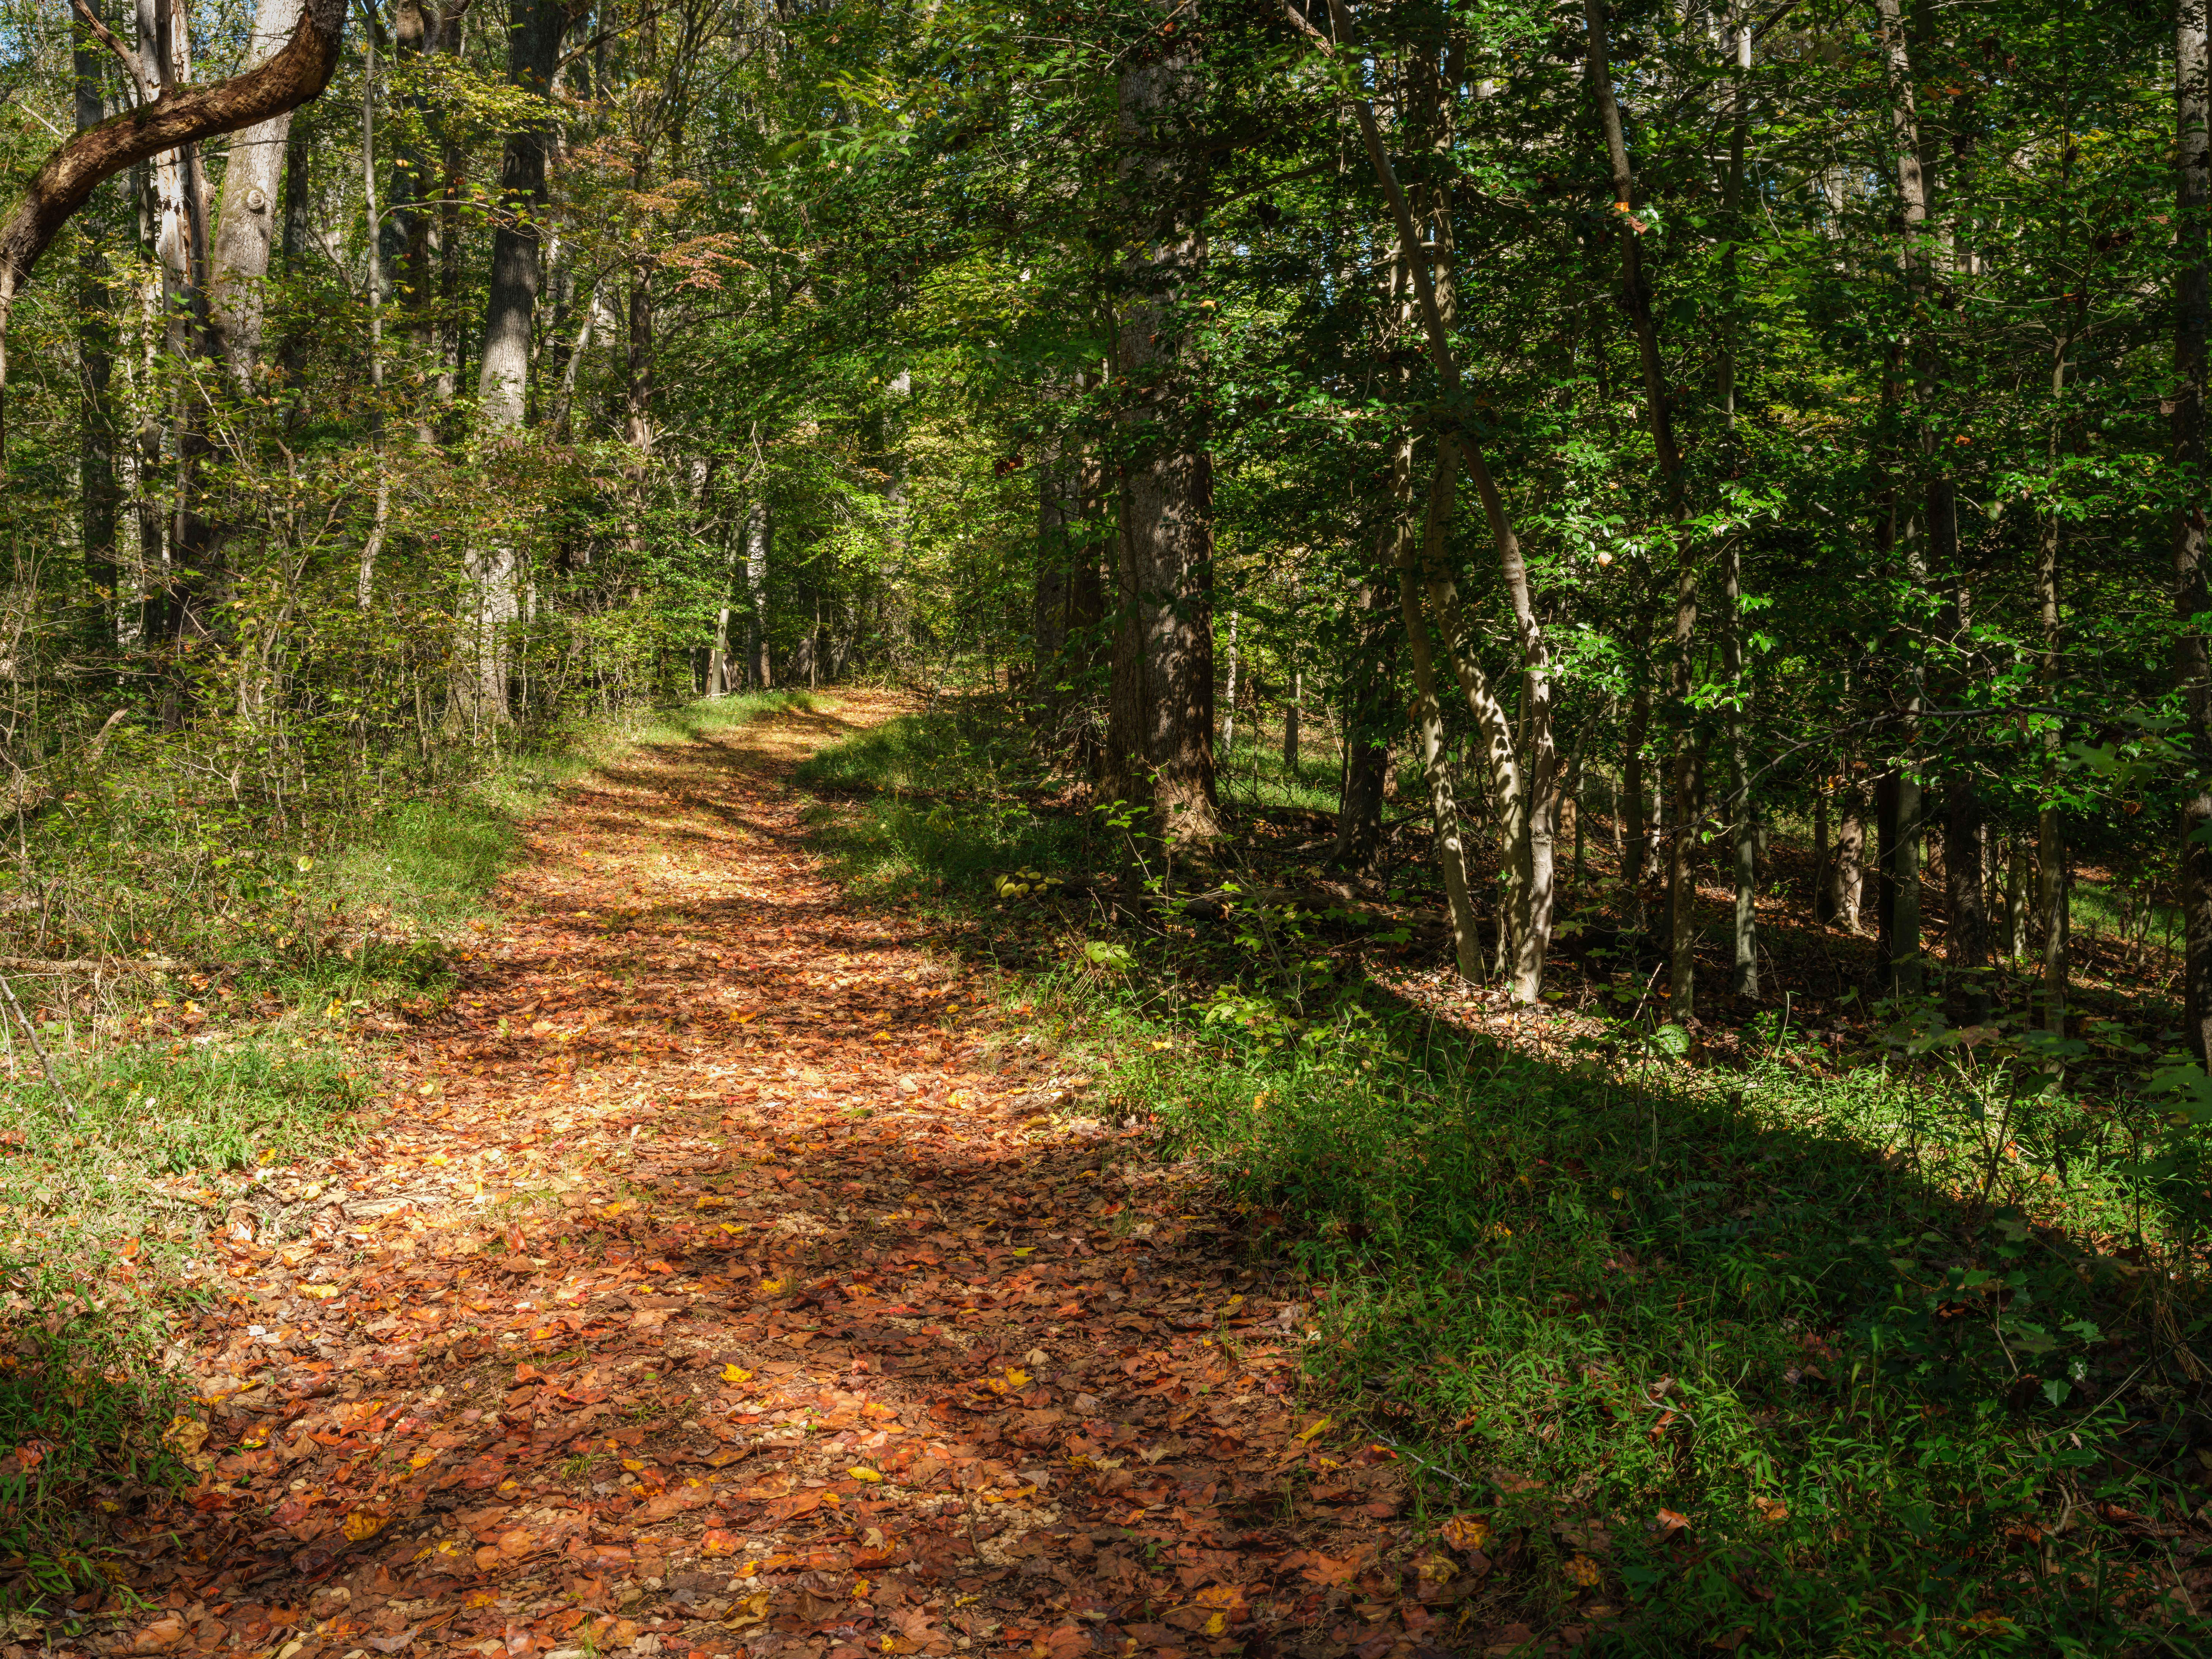 Leaf covered nature trail